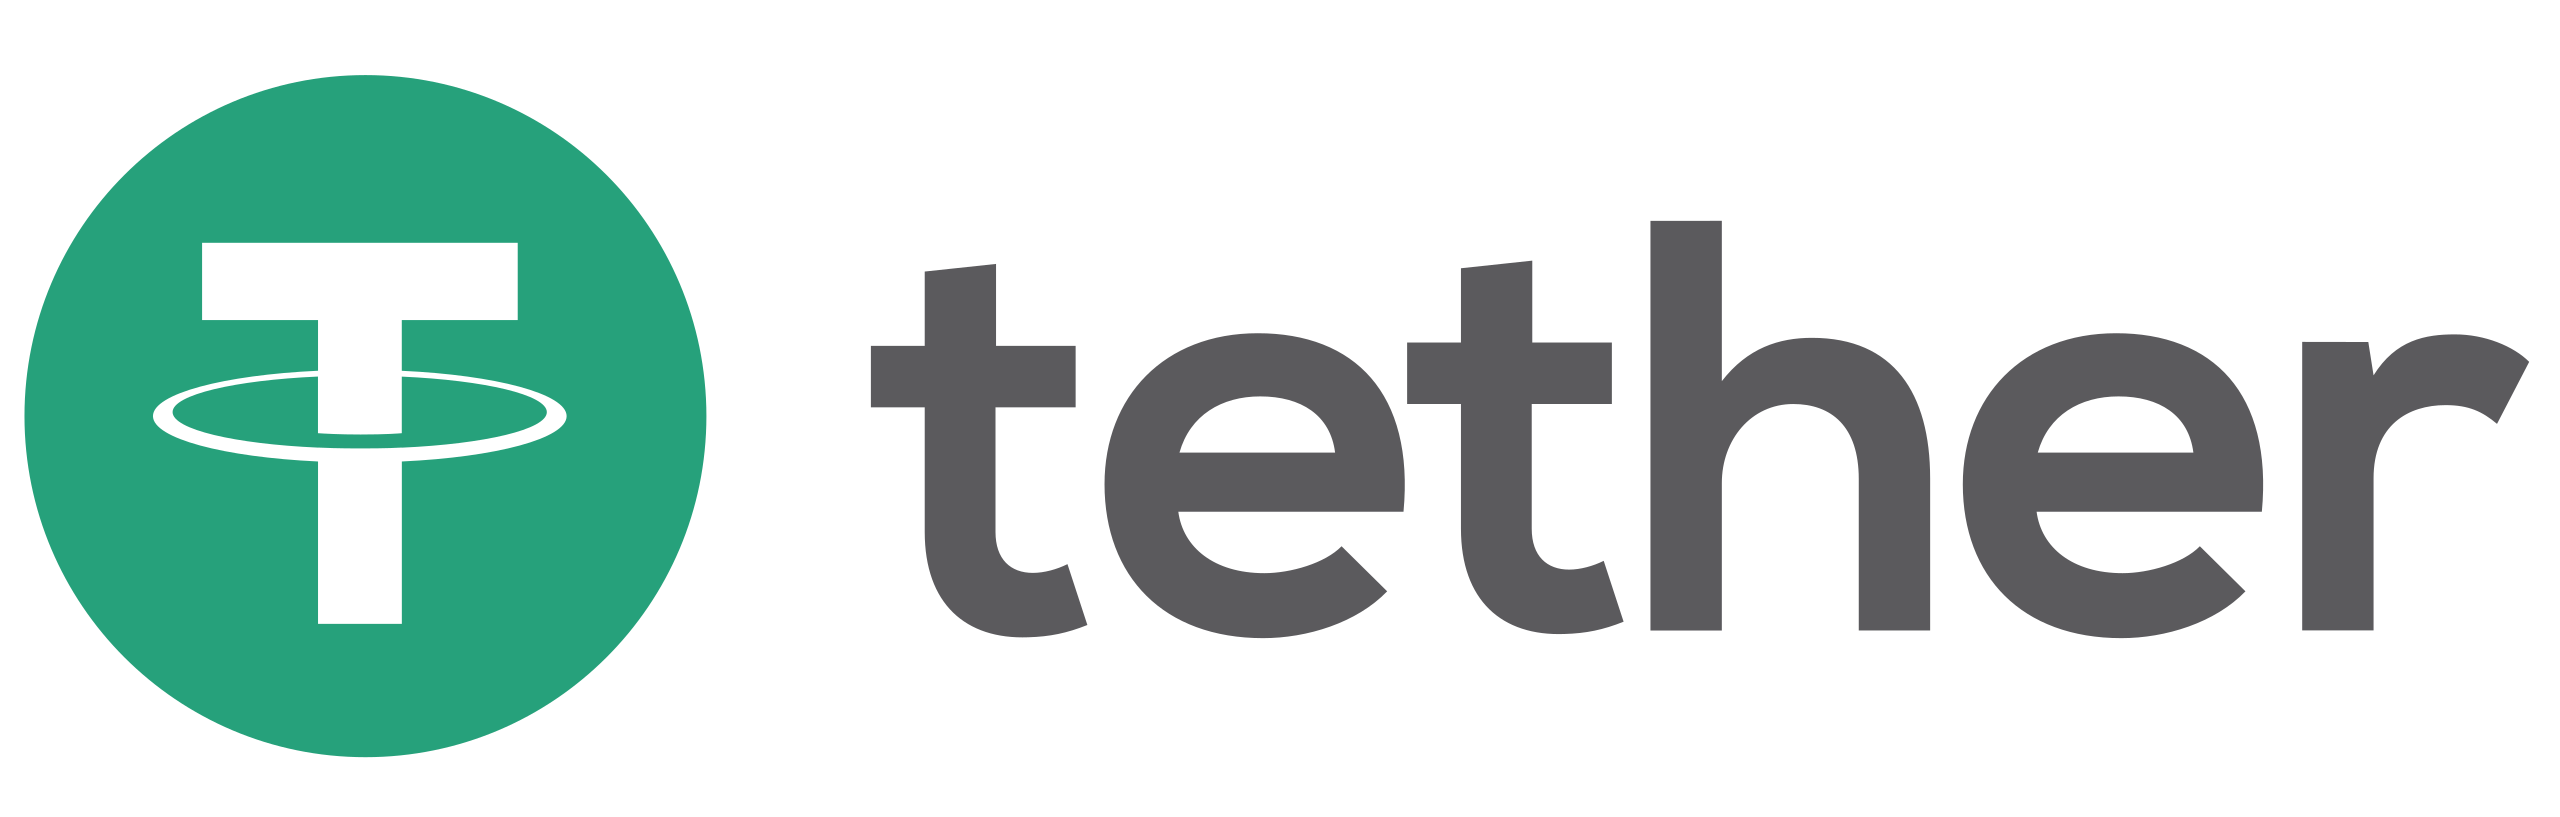 Tether (USDT) QR code generator logo